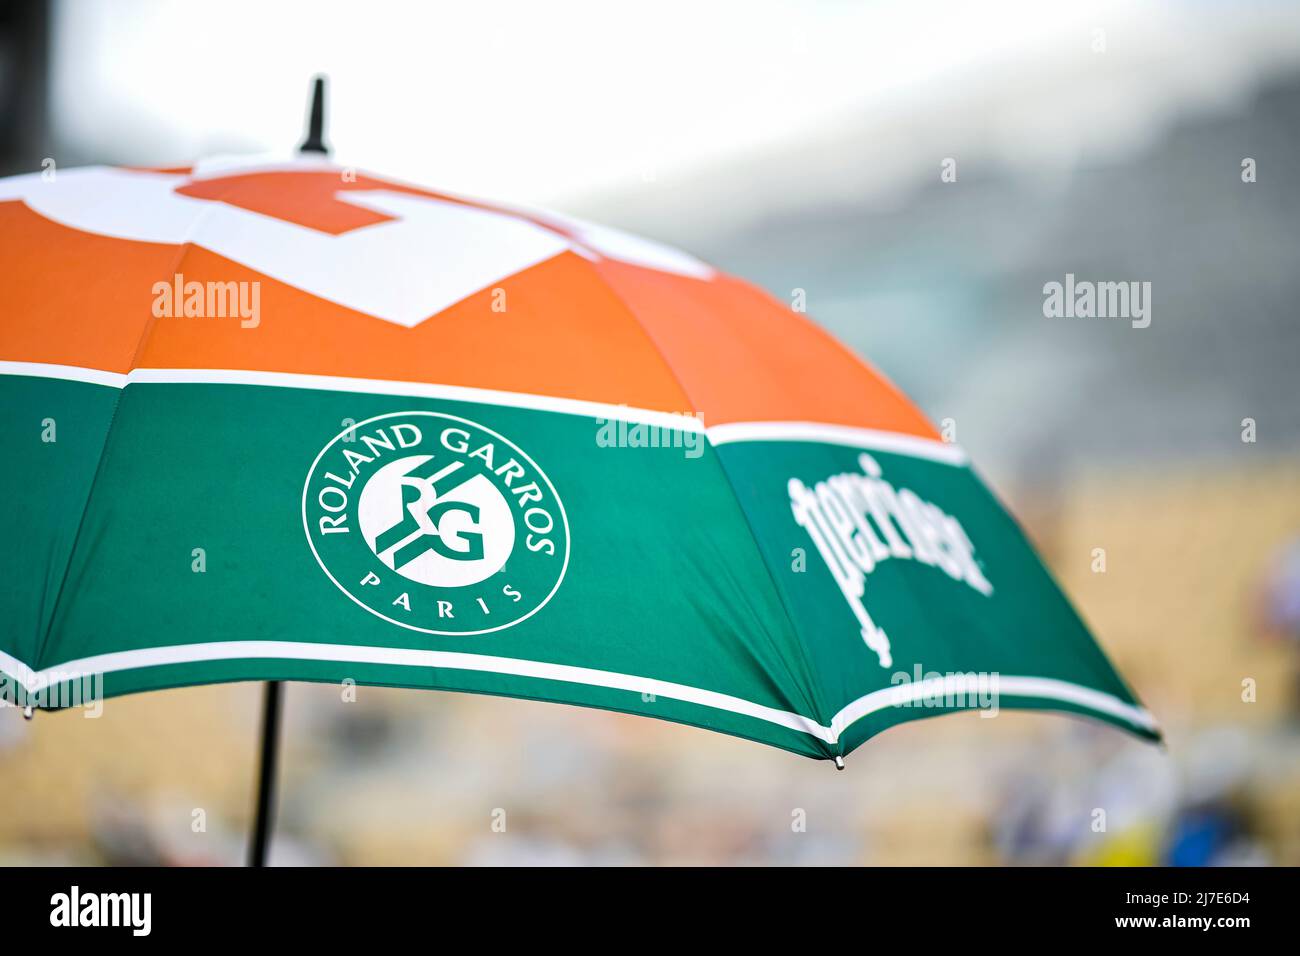 An umbrella or parasol at Roland-Garros (French Open), Grand Slam tennis tournament on June 2, 2021 at Roland-Garros stadium in Paris, France. Stock Photo